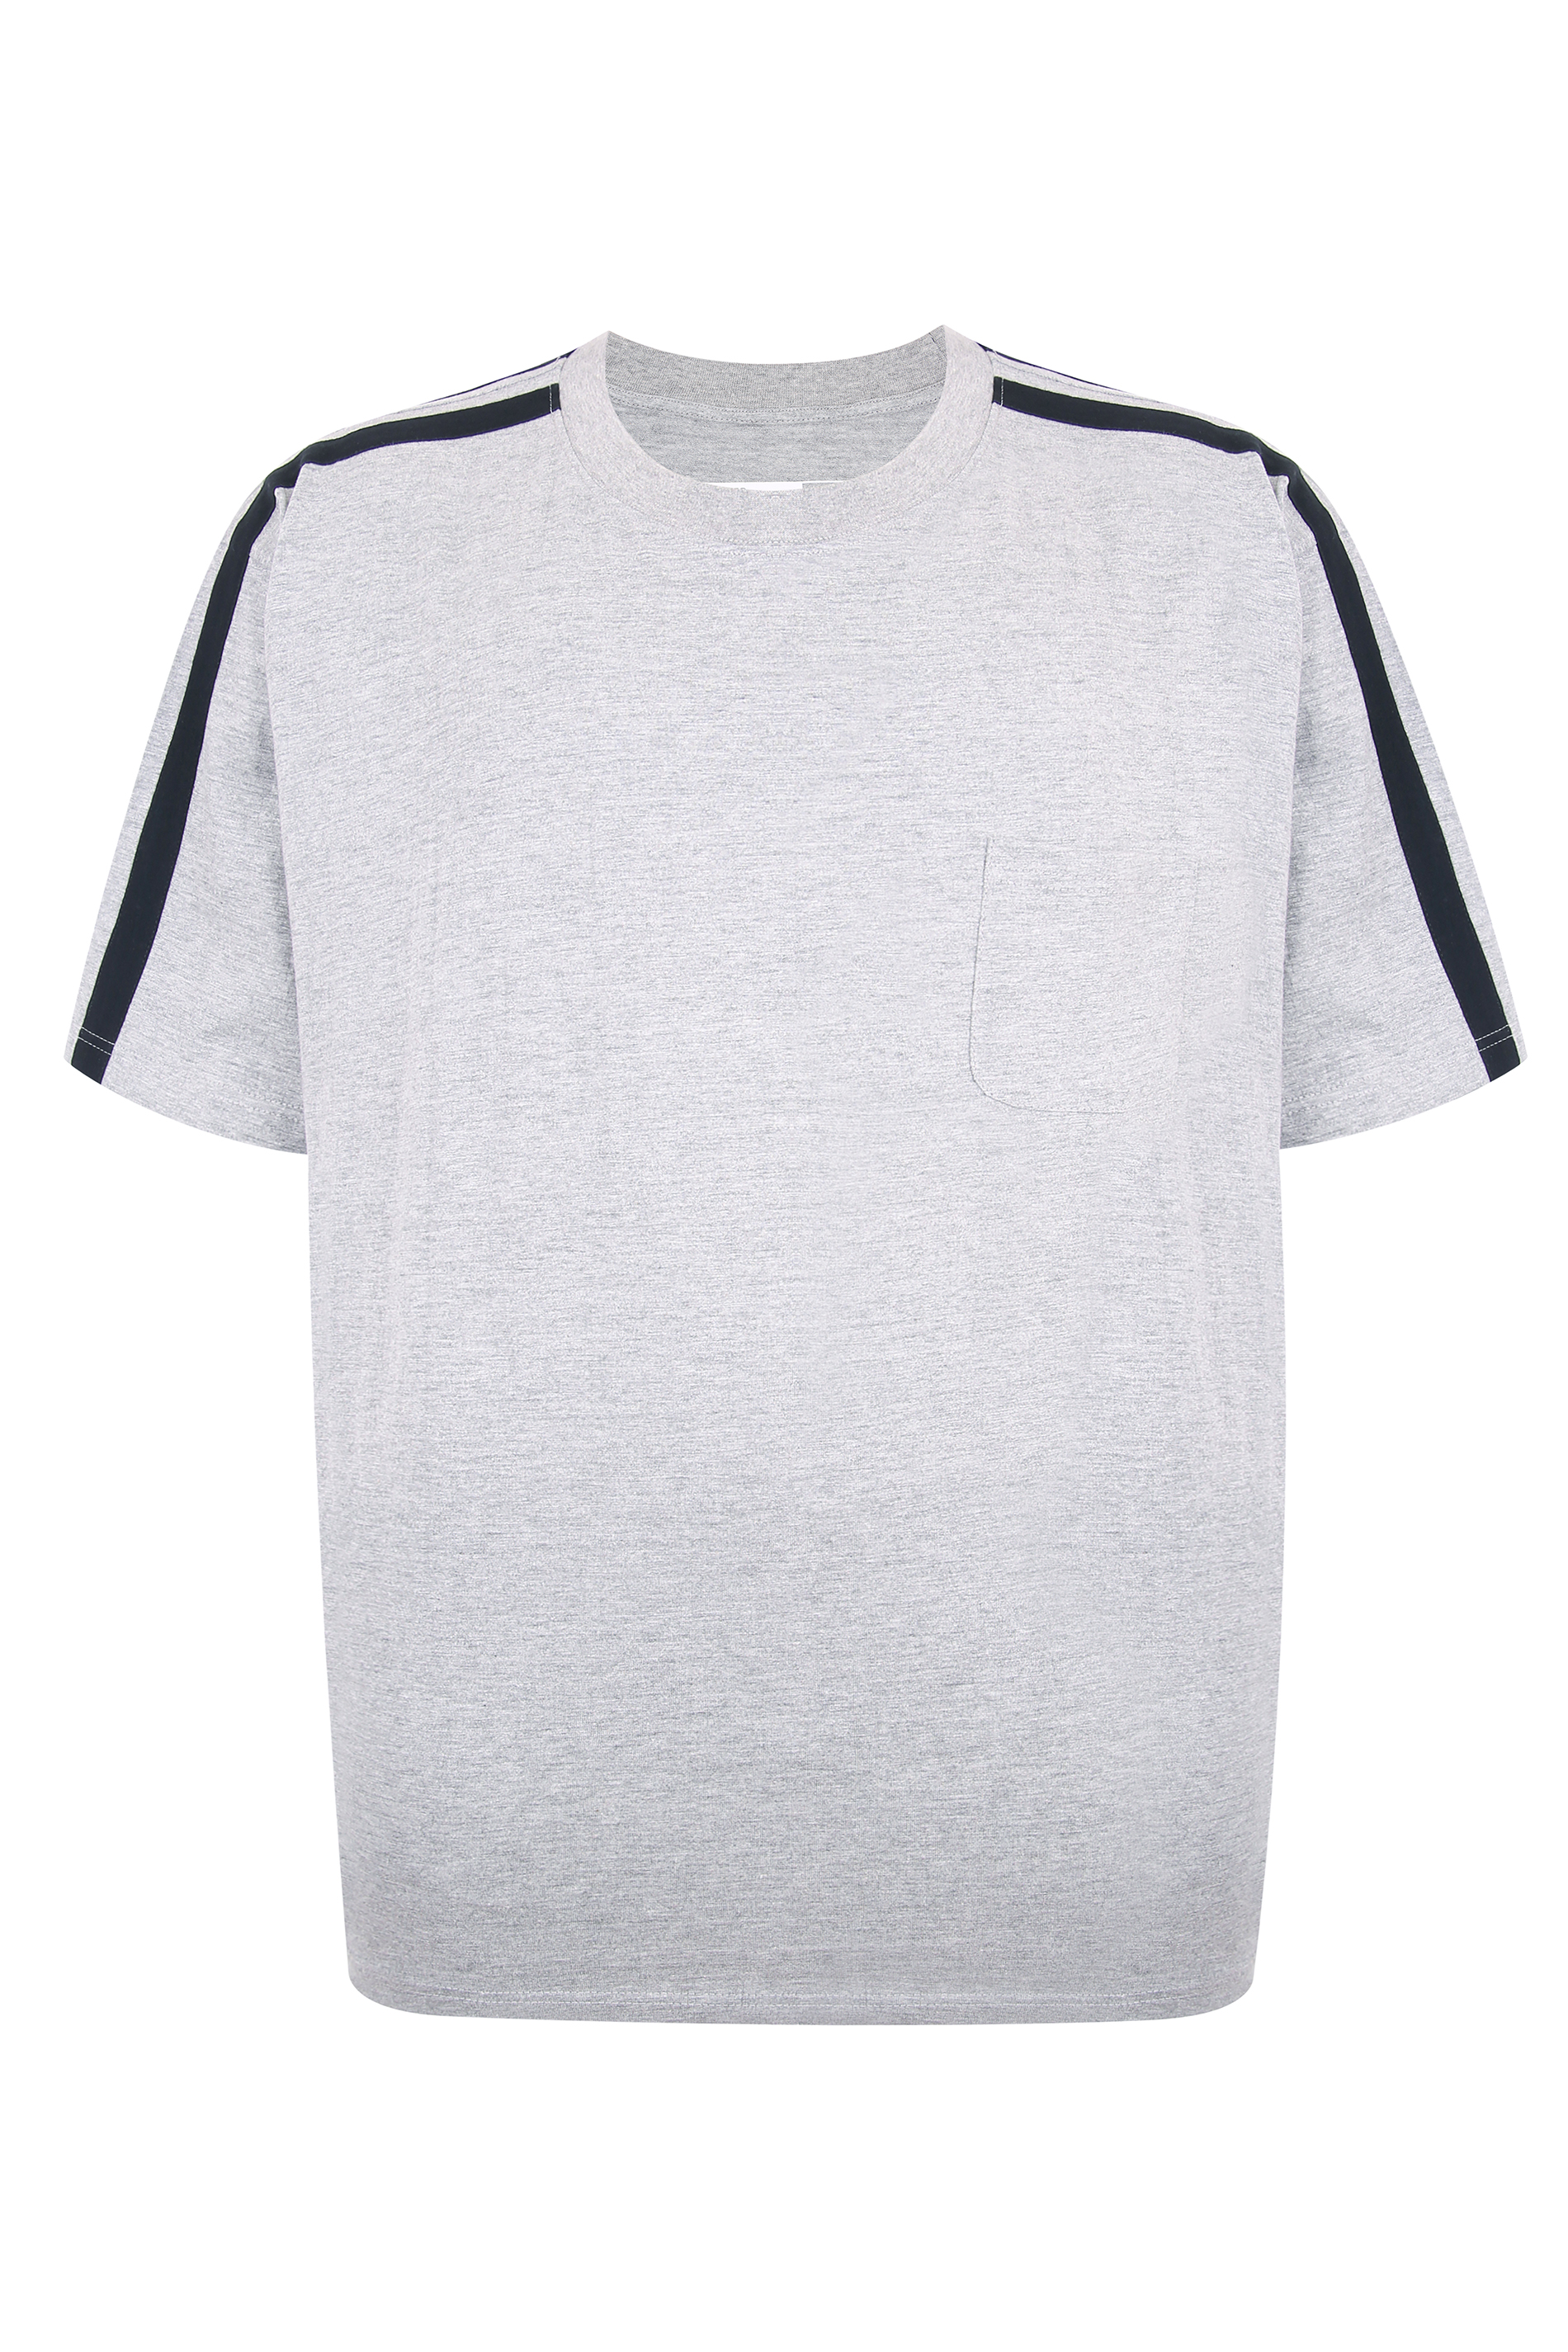 ED BAXTER Big & Tall Grey Lounge T-Shirt_F.jpg